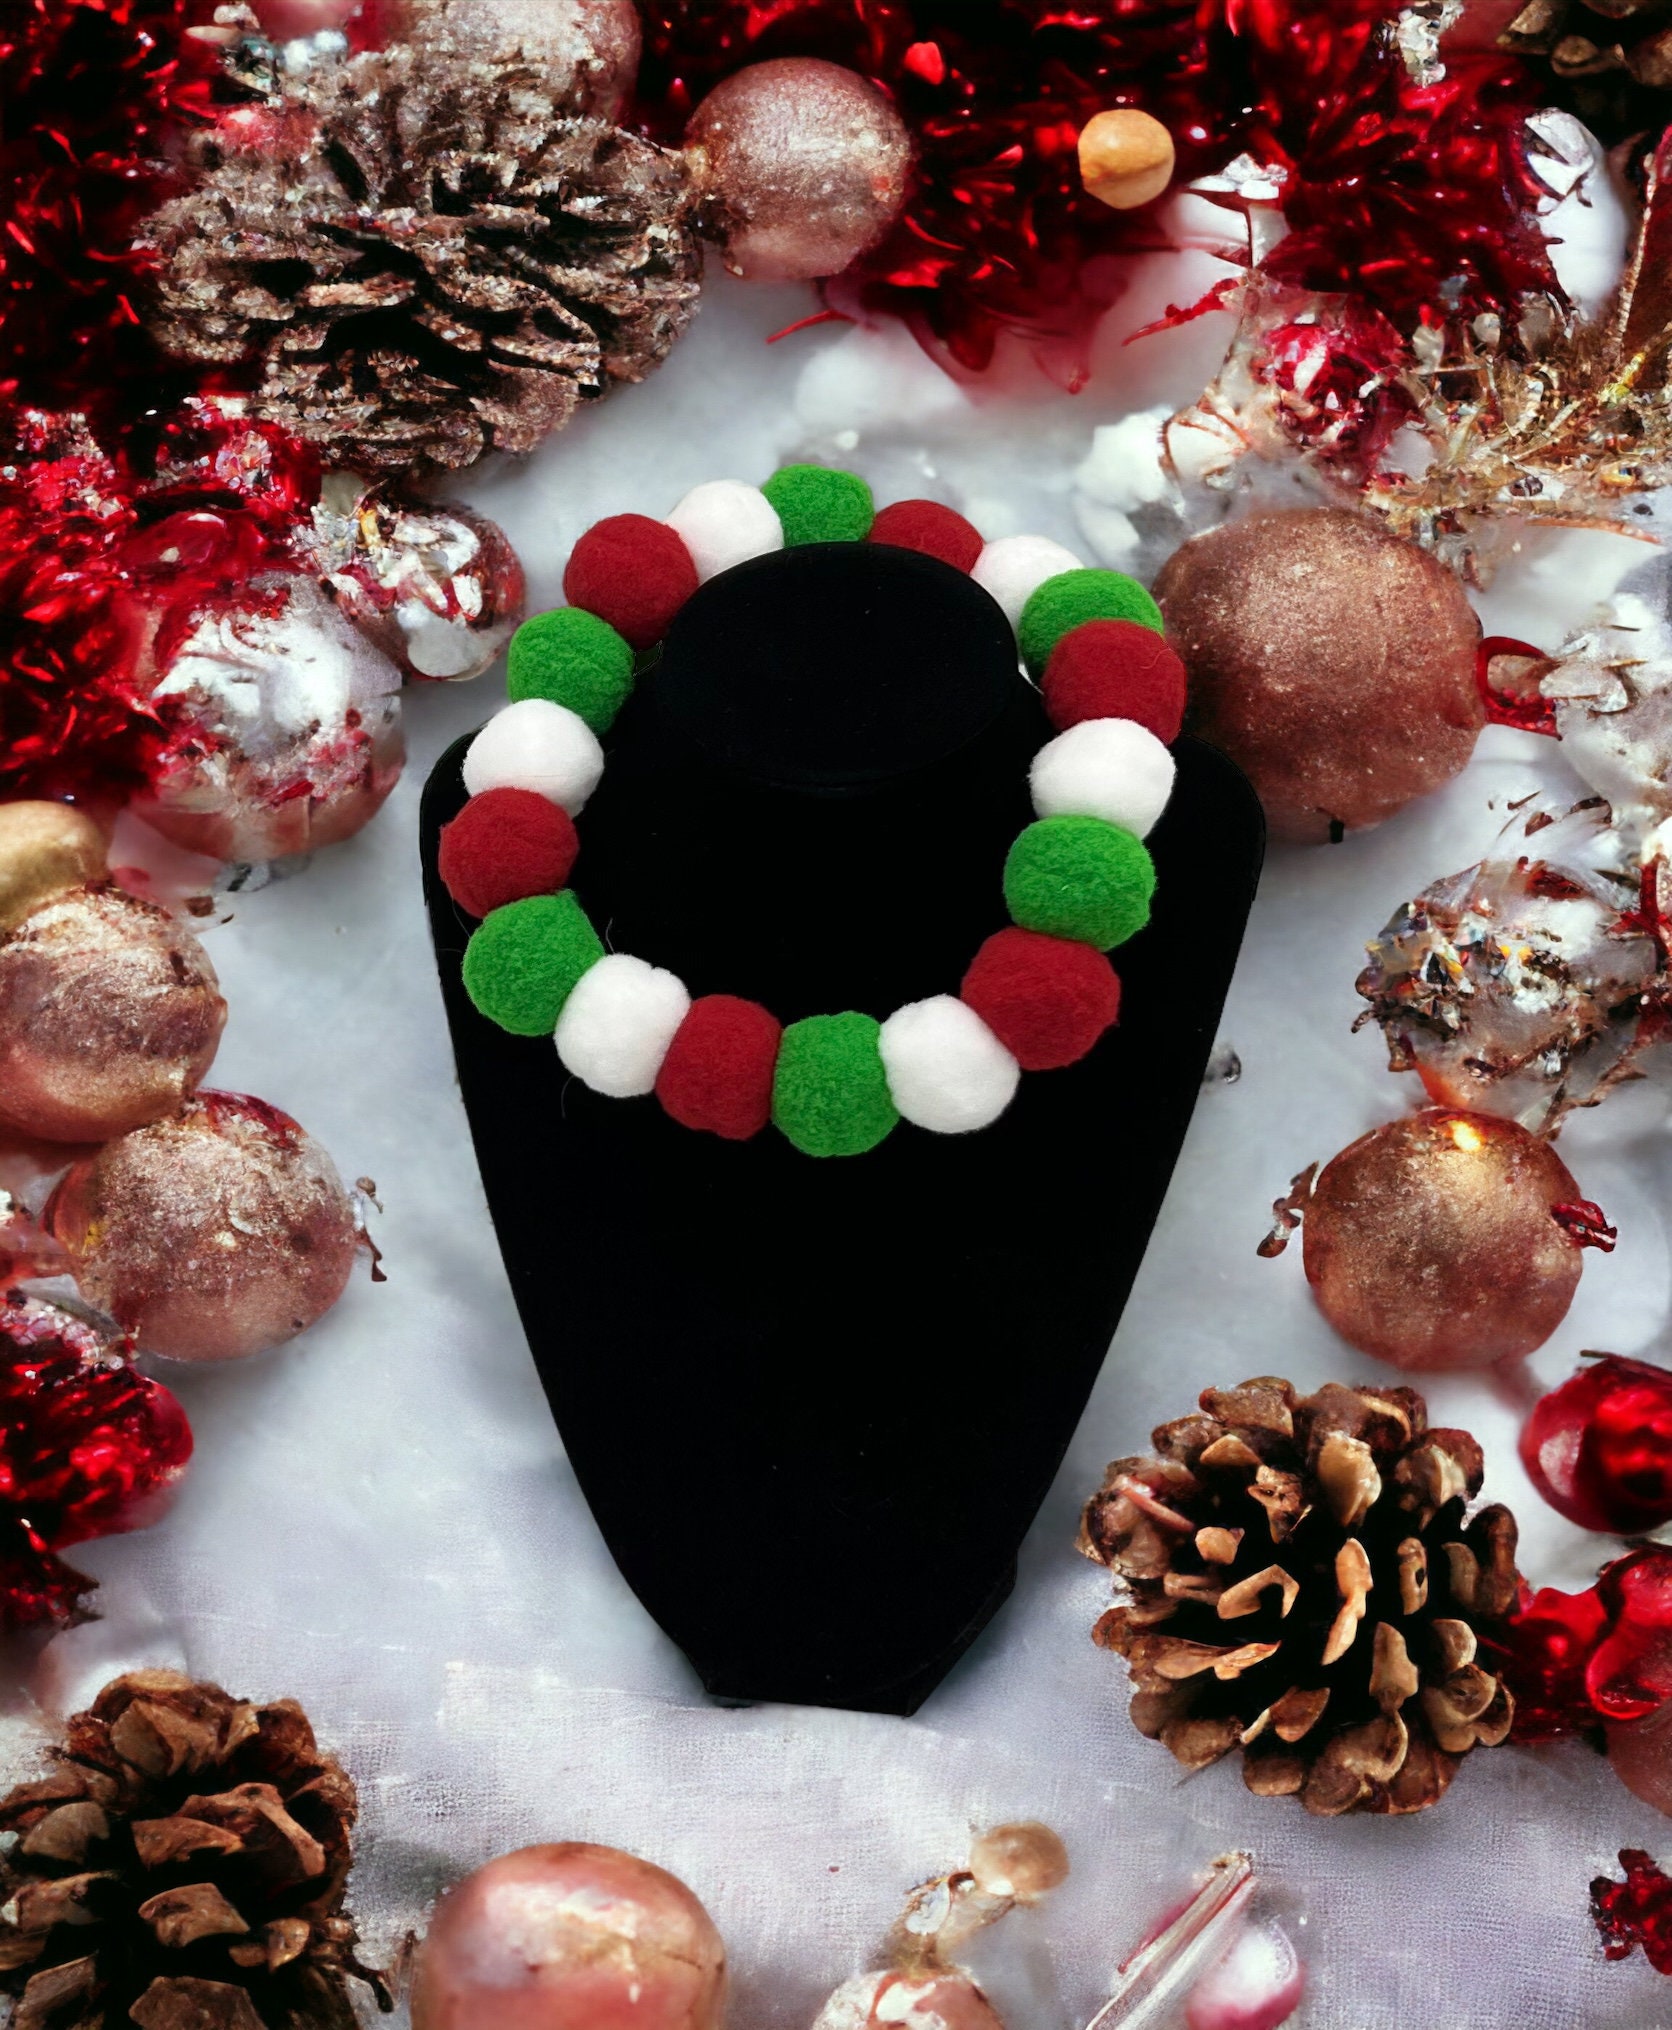 Red Pom Poms - 1 inch or 25mm - Set of 25 Pieces - Plush Pompoms - Plush  Balls - Embellishment - DIY Garland - Reindeer Nose Christmas DIY